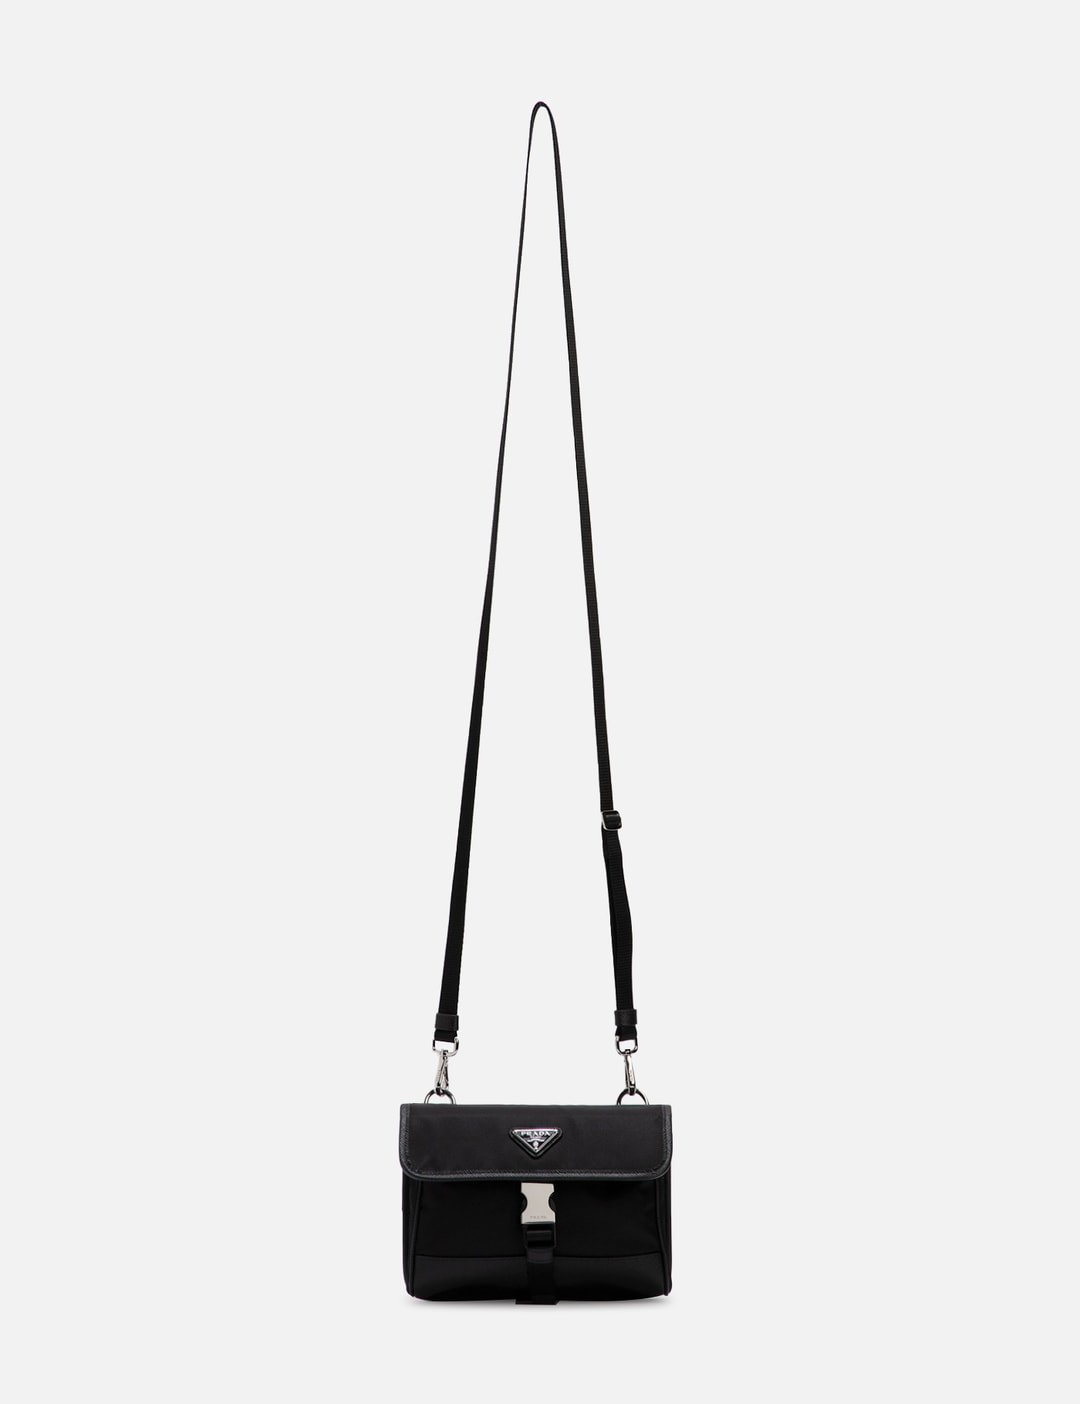 Prada - Nylon Camera Bag  HBX - Globally Curated Fashion and